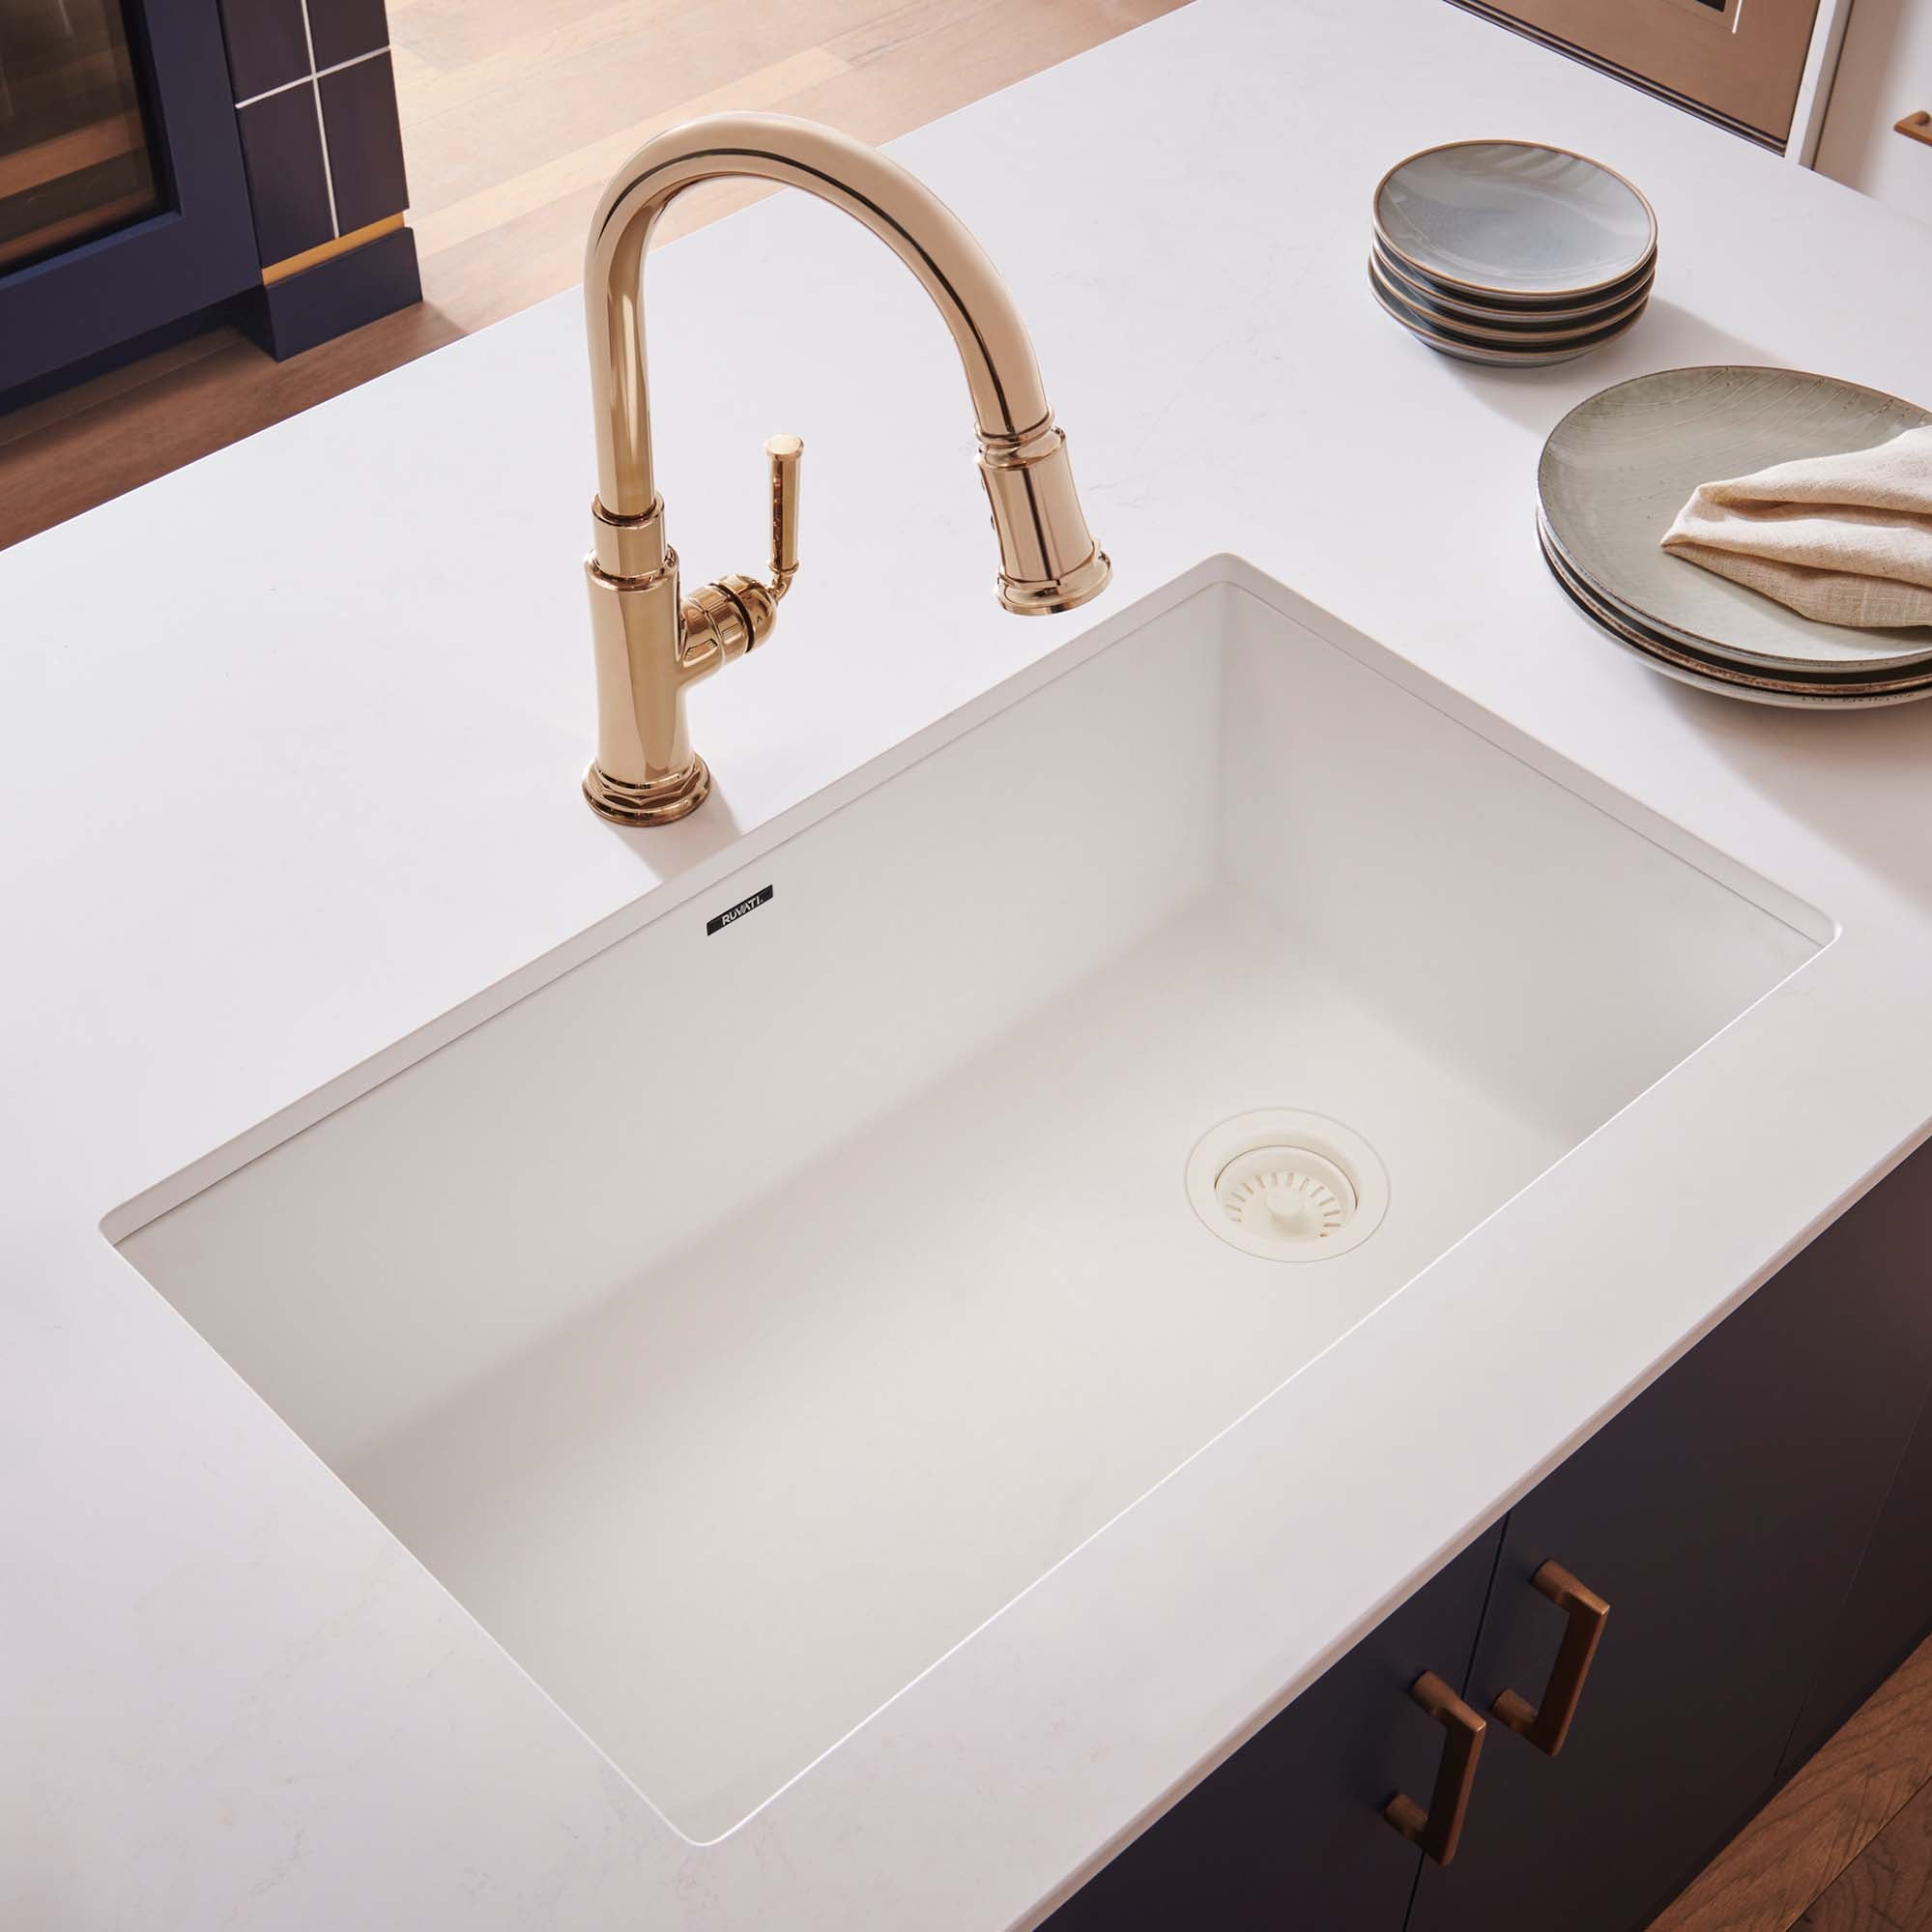 Ruvati 32 x 19 inch epiGranite Undermount Granite Composite Single Bowl Kitchen Sink – Arctic White